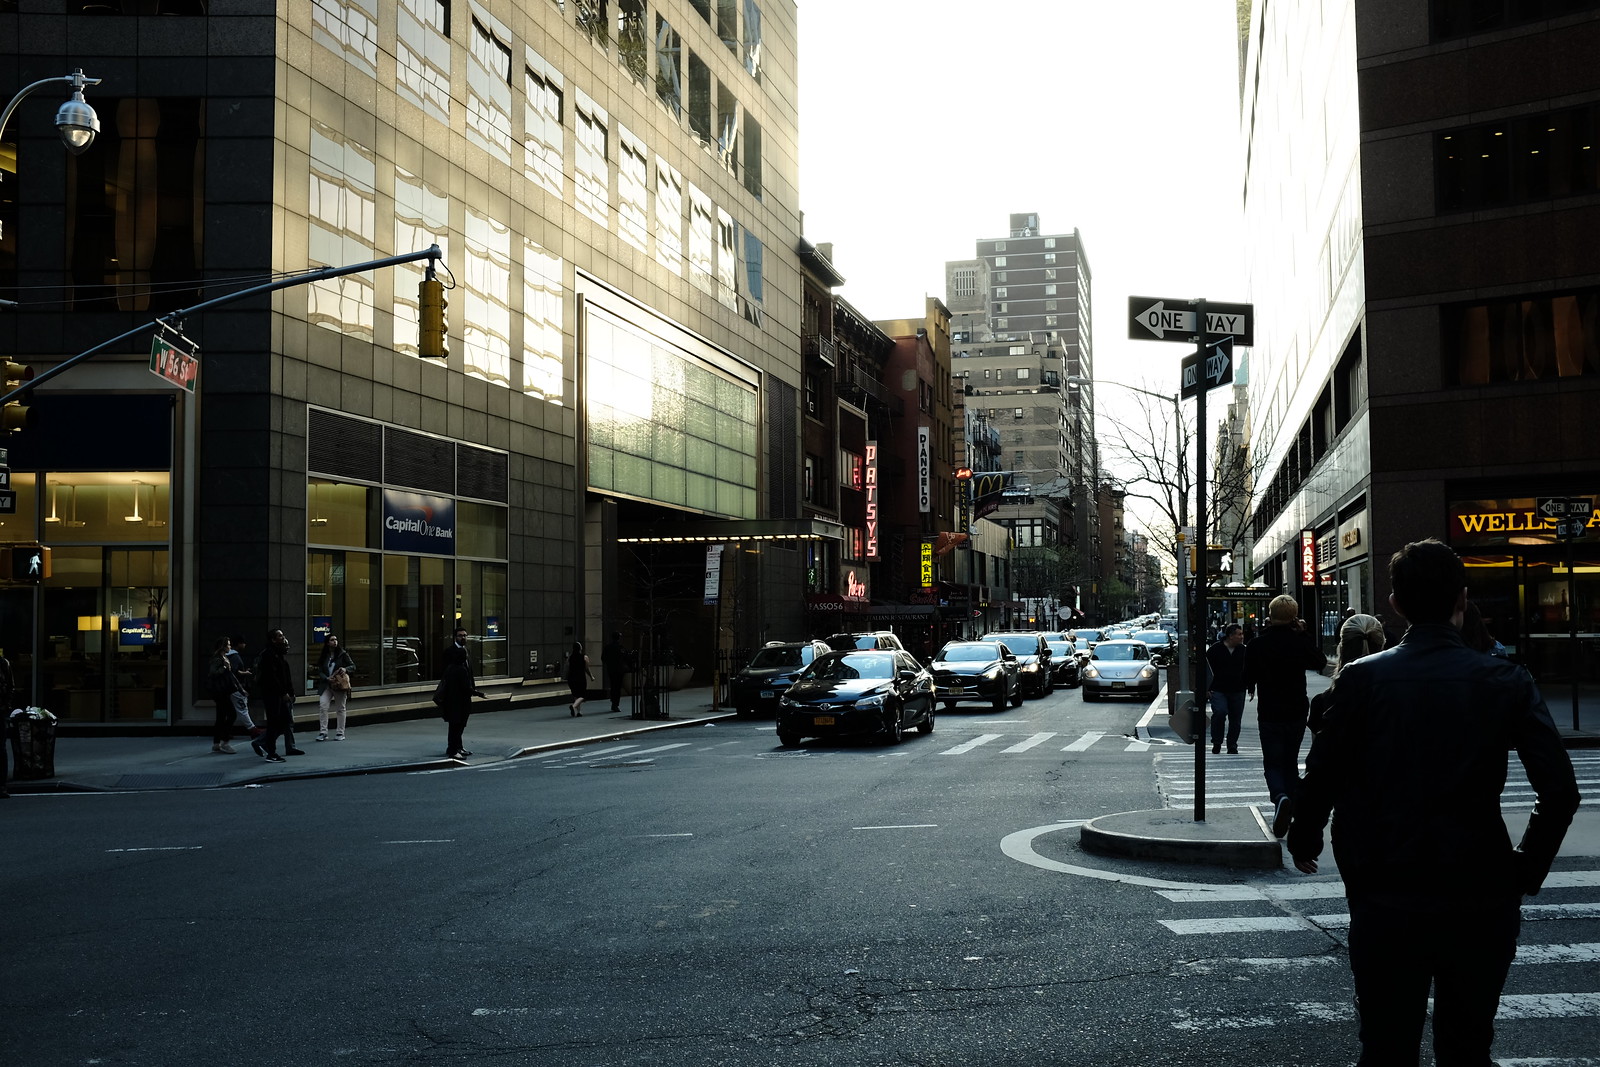 The New York Photo by FUJIFILM X100S.